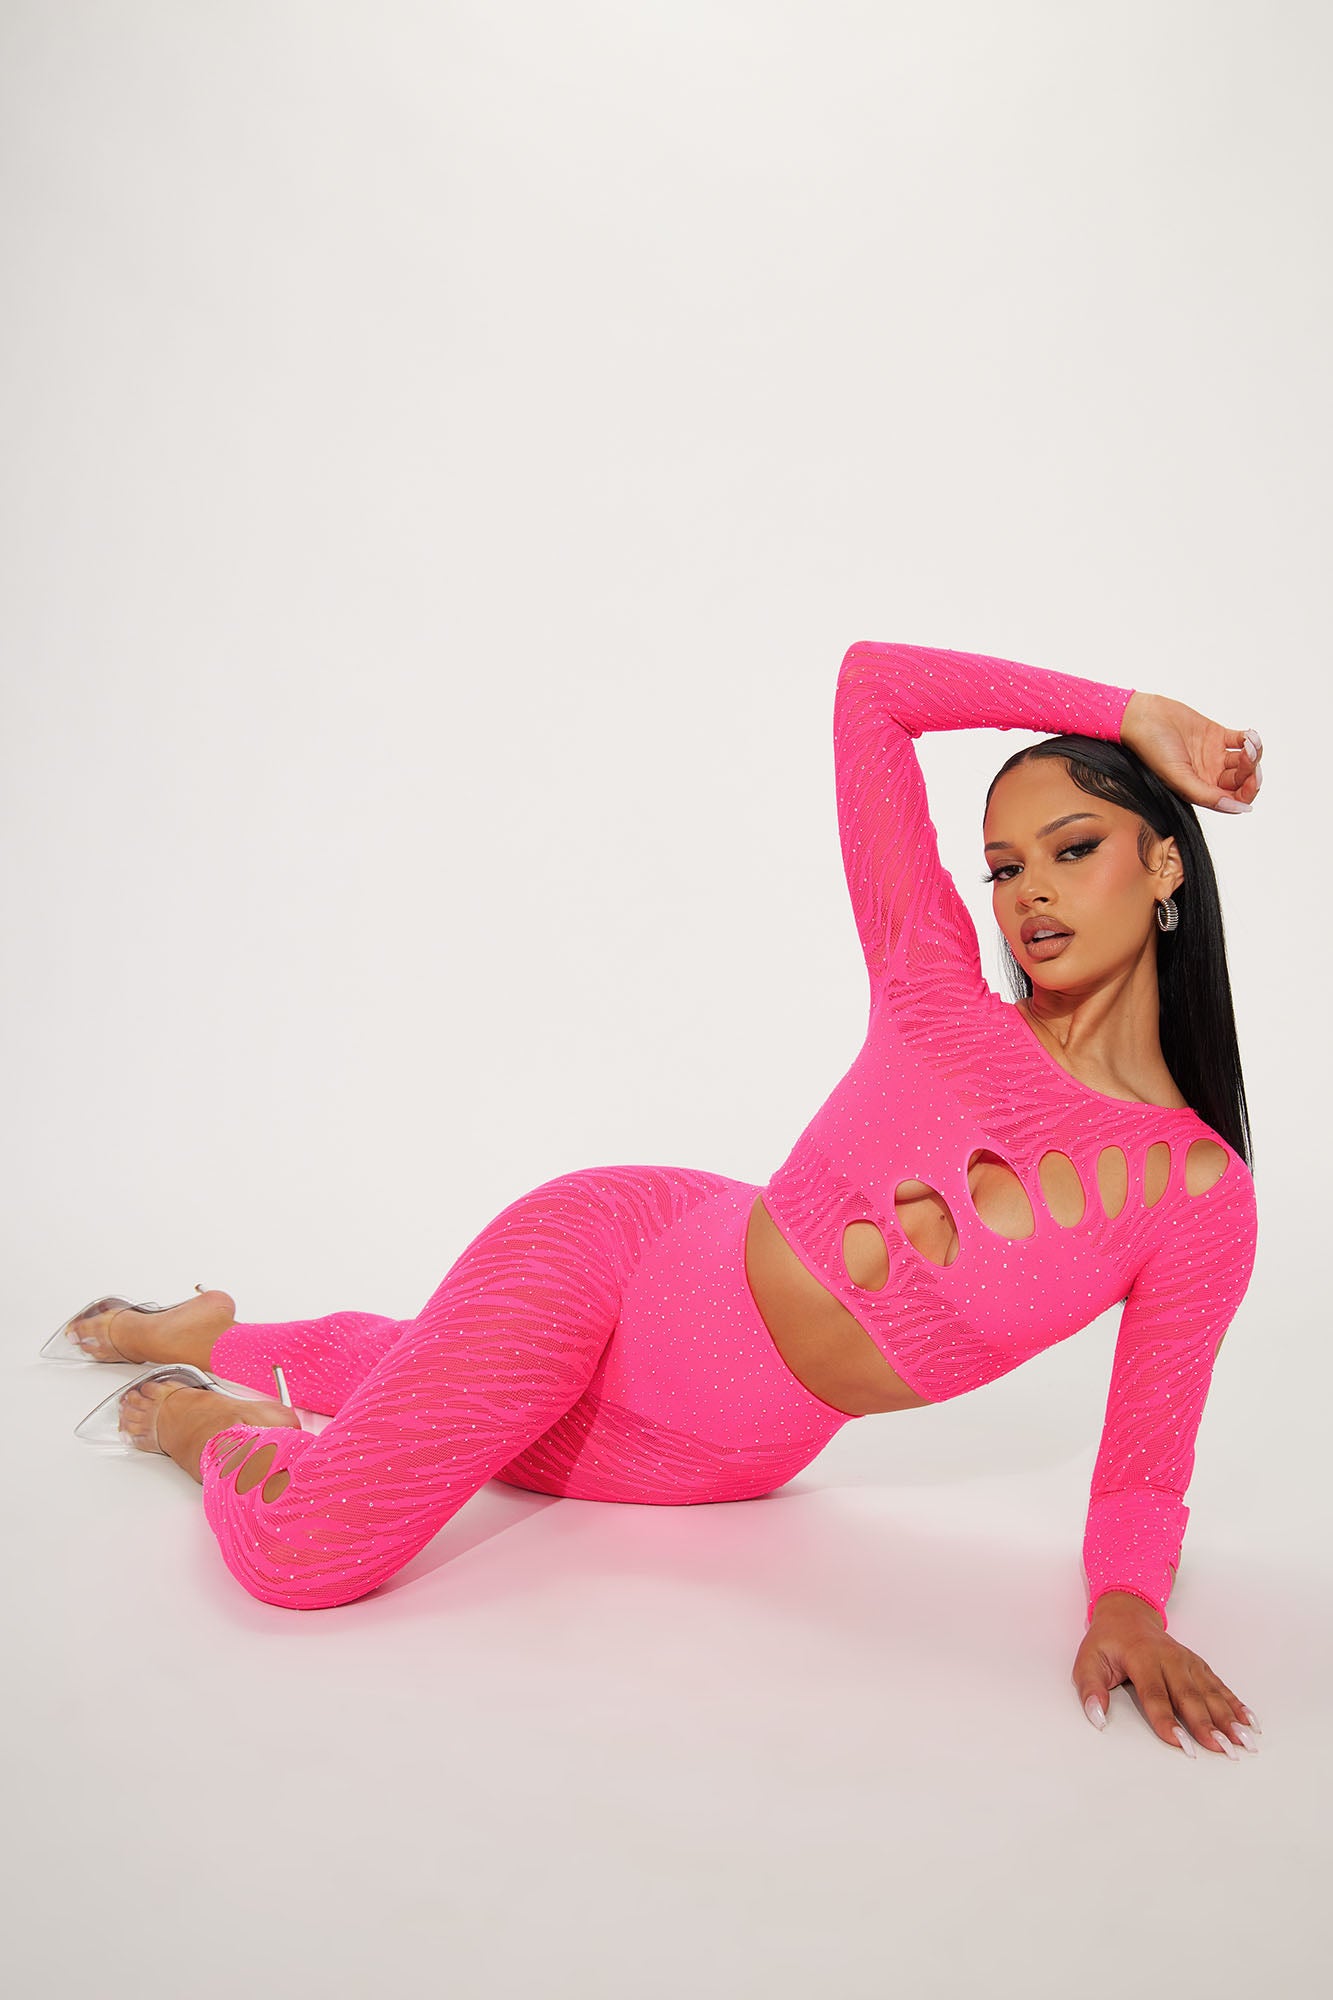 Blame It On Me Legging Set - Neon Pink, Fashion Nova, Matching Sets